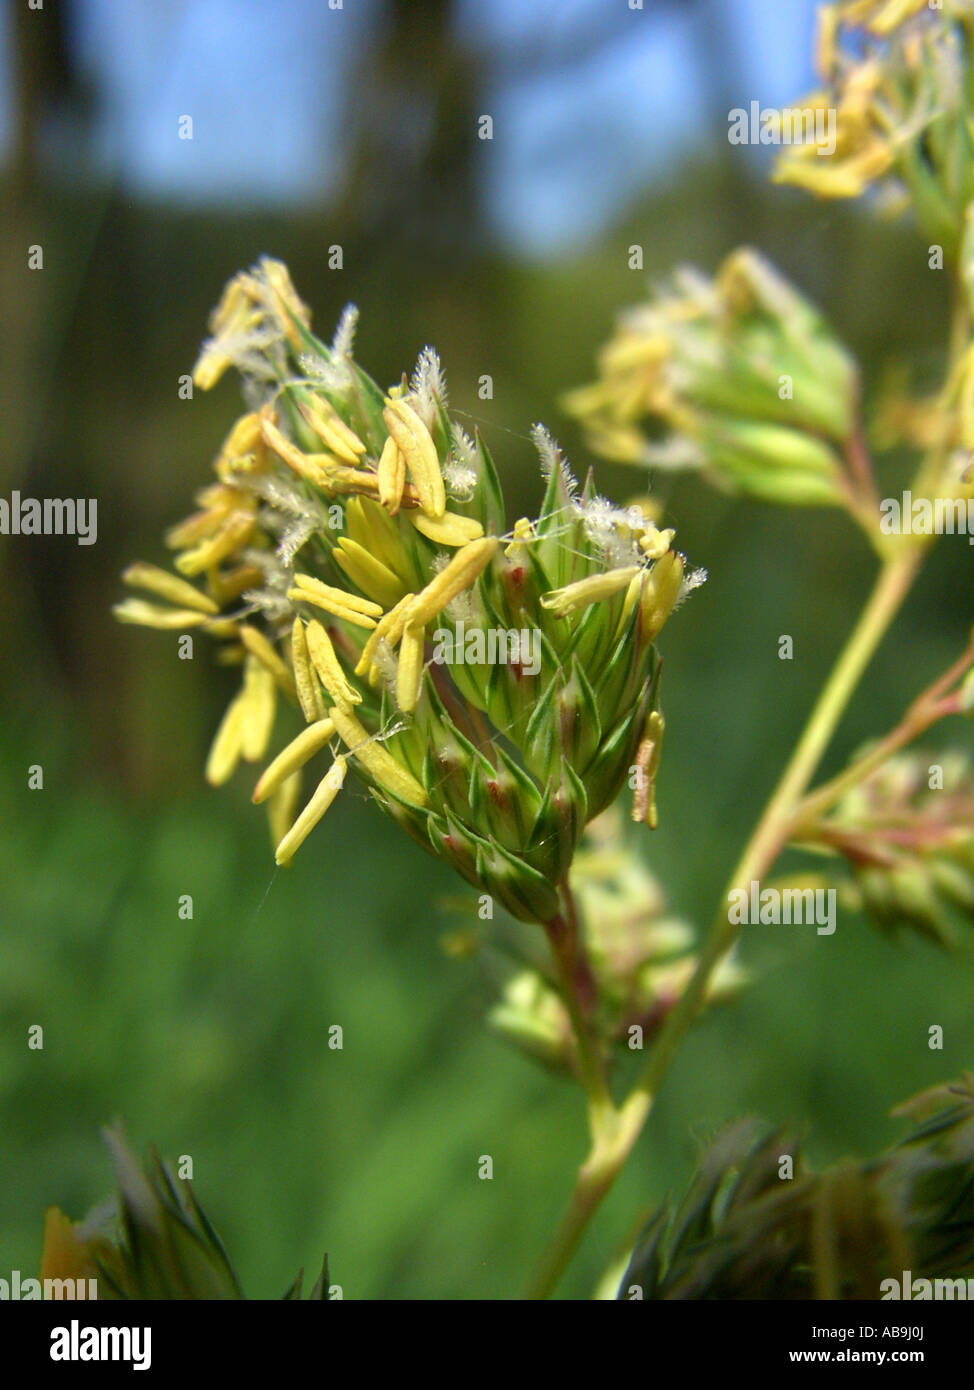 reed Canary grass (Phalaris arundinacea), spikelets, Germany Stock Photo